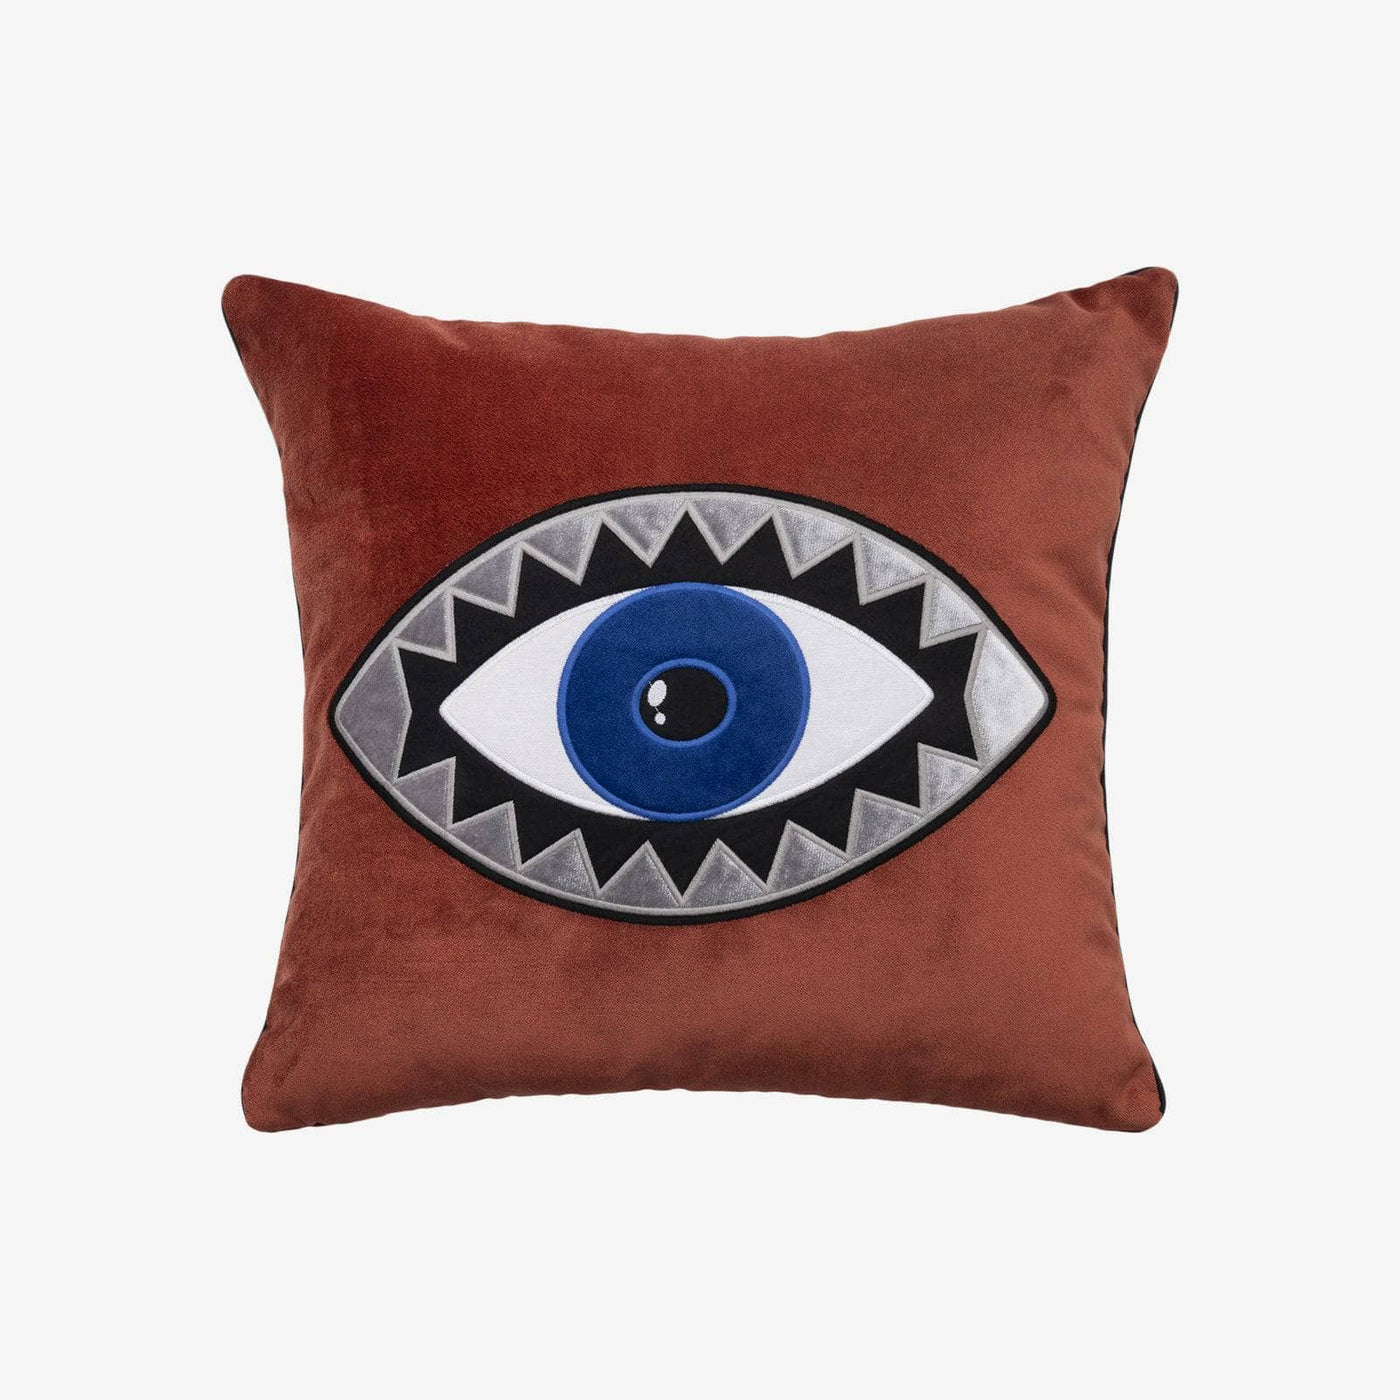 Sacred Eye Cushion Cover, Cinnamon - Silver, 45x45 cm - 1